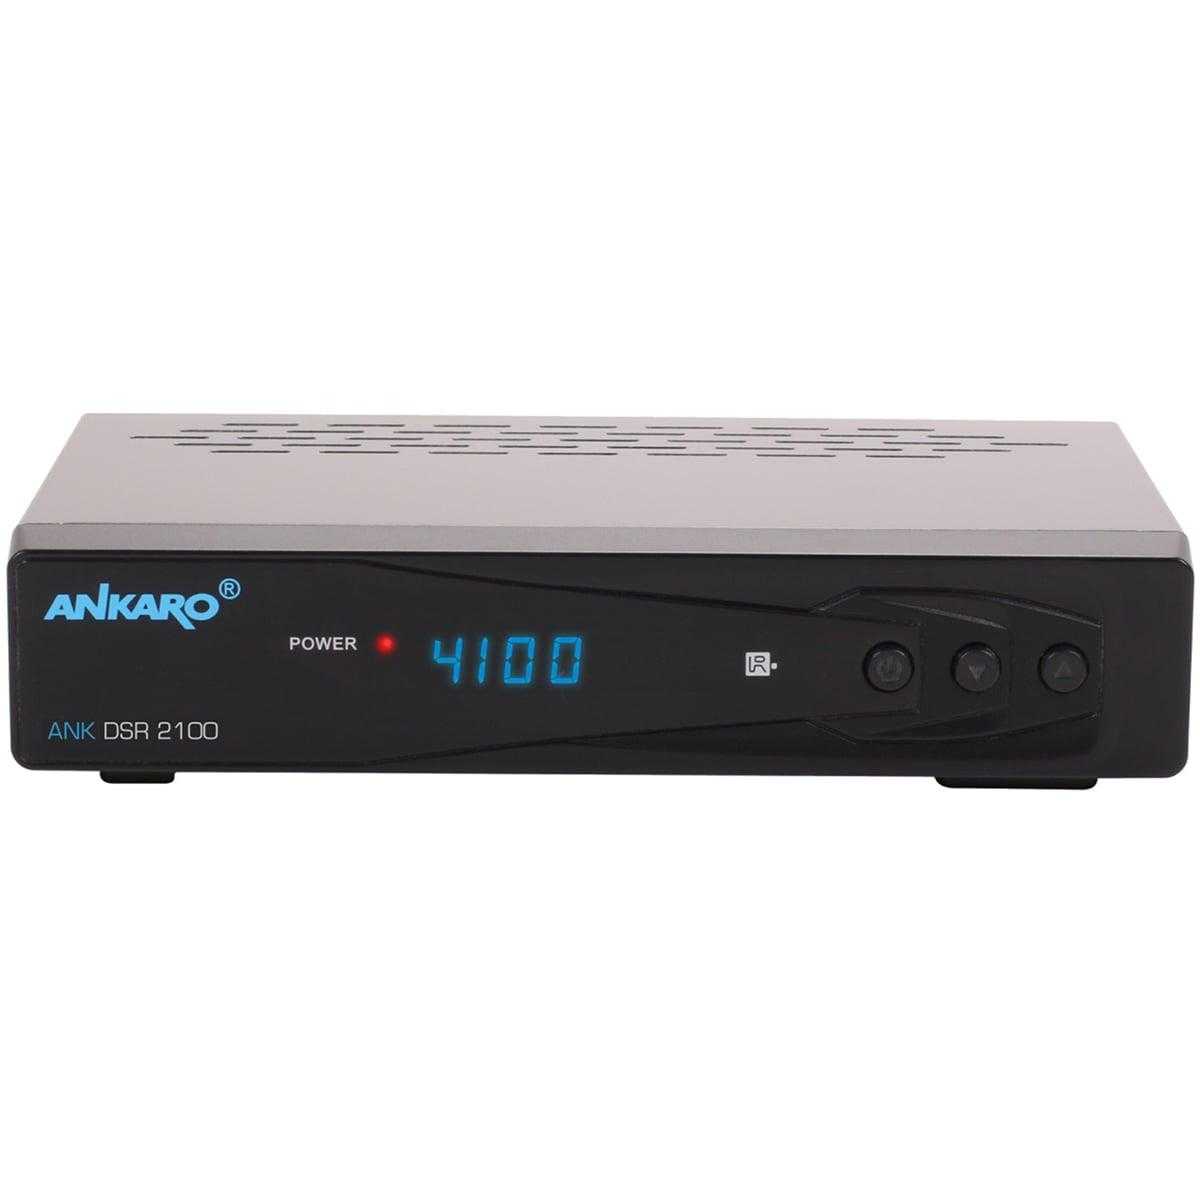 Ankaro ANK DSR 2100 Digitaler 1080p Full HD USB HDMI PVR DVB-S2 Satelliten Receiver B-Ware von Ankaro